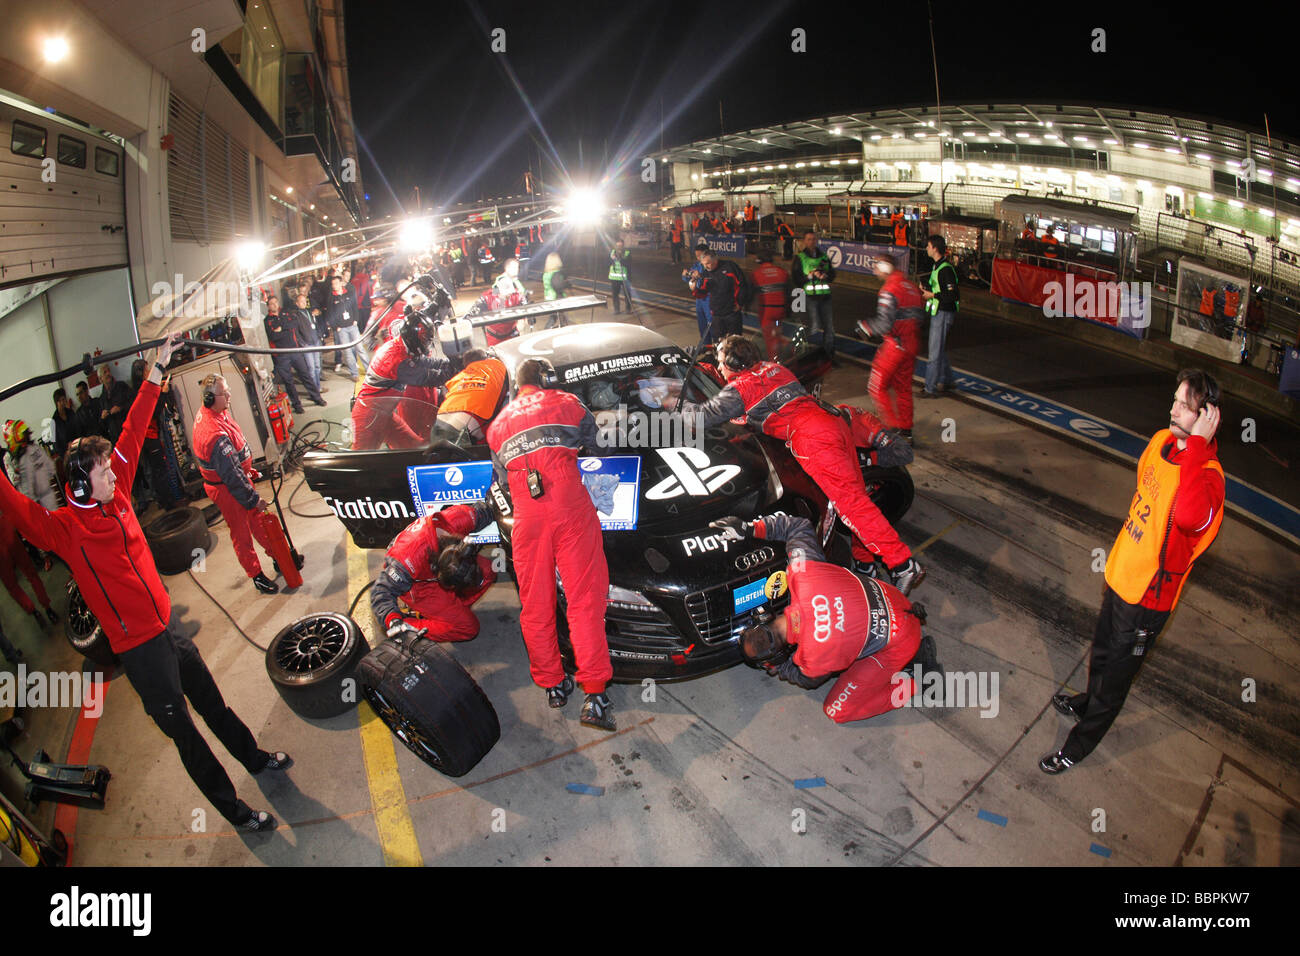 24-Stunden-Rennen auf der Nürburgring Rennstrecke, der Audi R8 Team Abt Sportsline Abt, Christian D - Kempten Hemroulle Jean-Francois Stockfoto